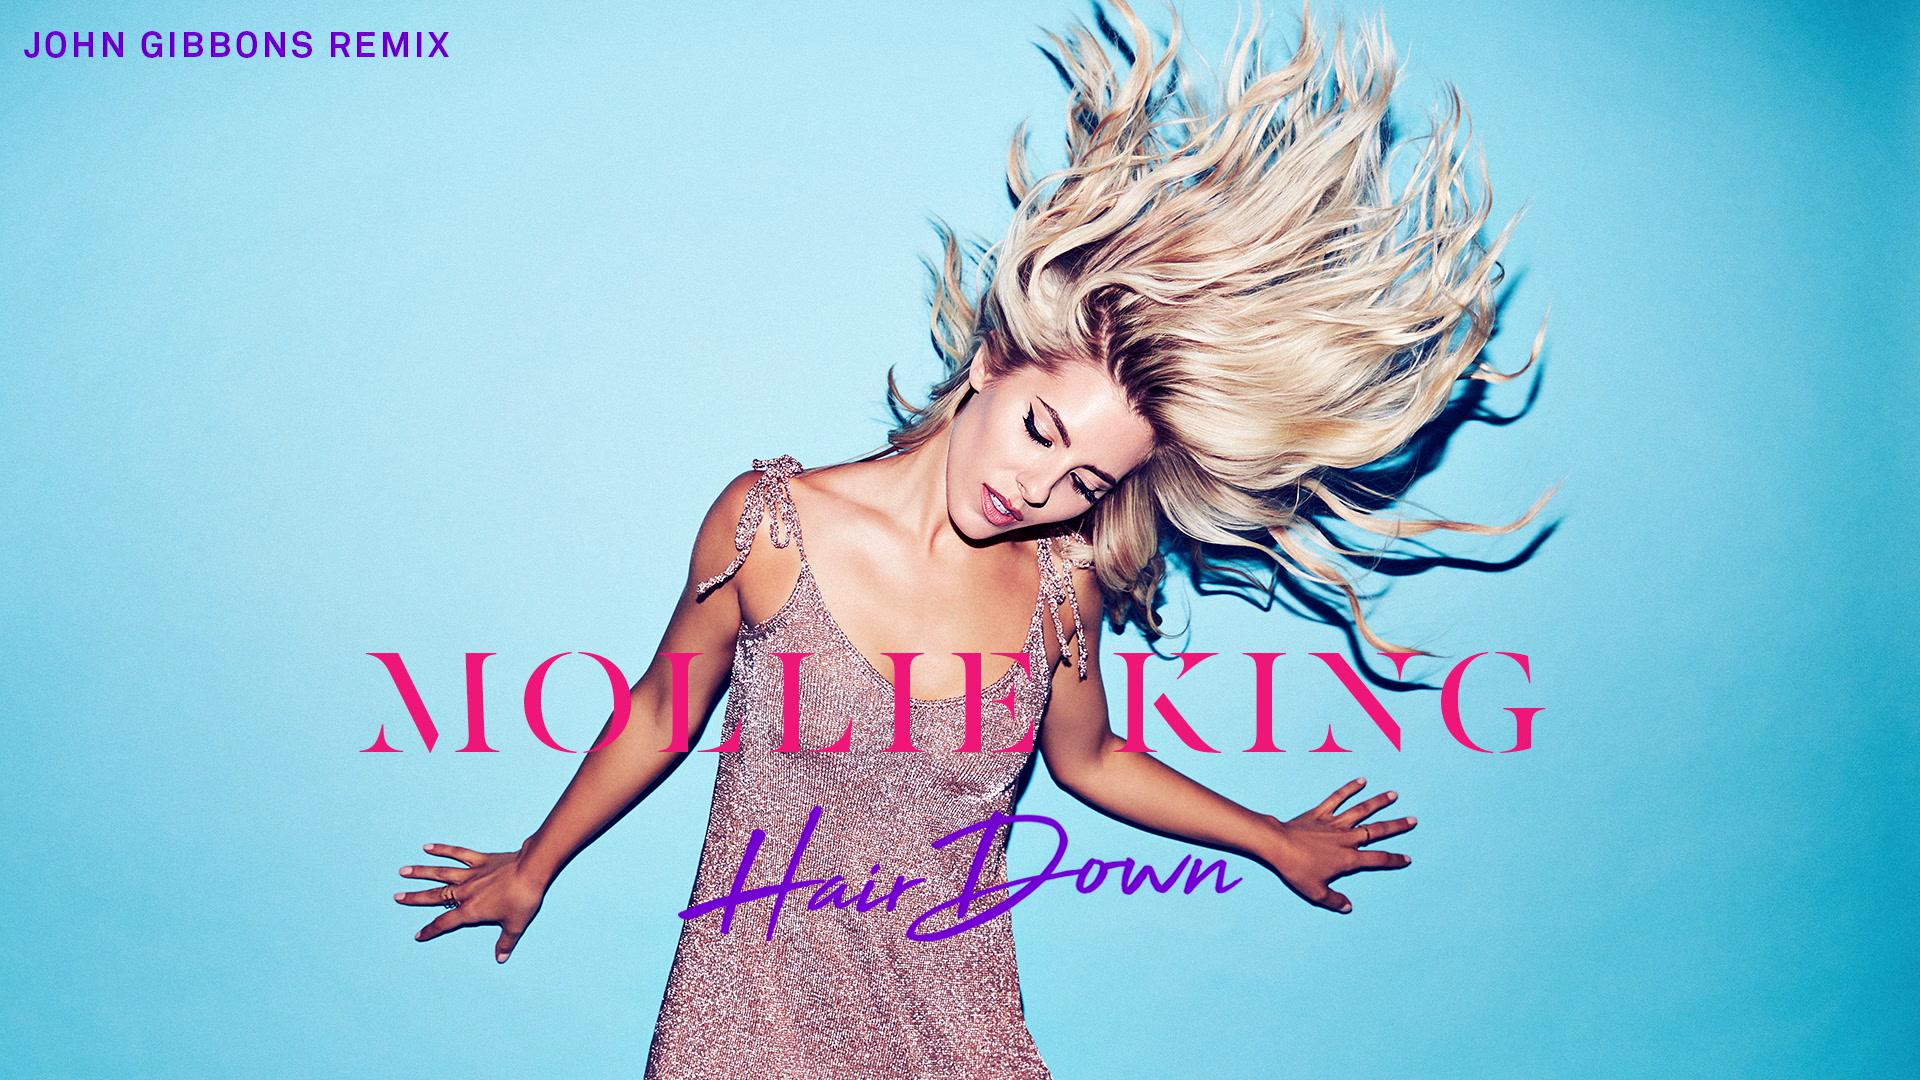 Mollie King - Hair Down (John Gibbons Remix / Audio)